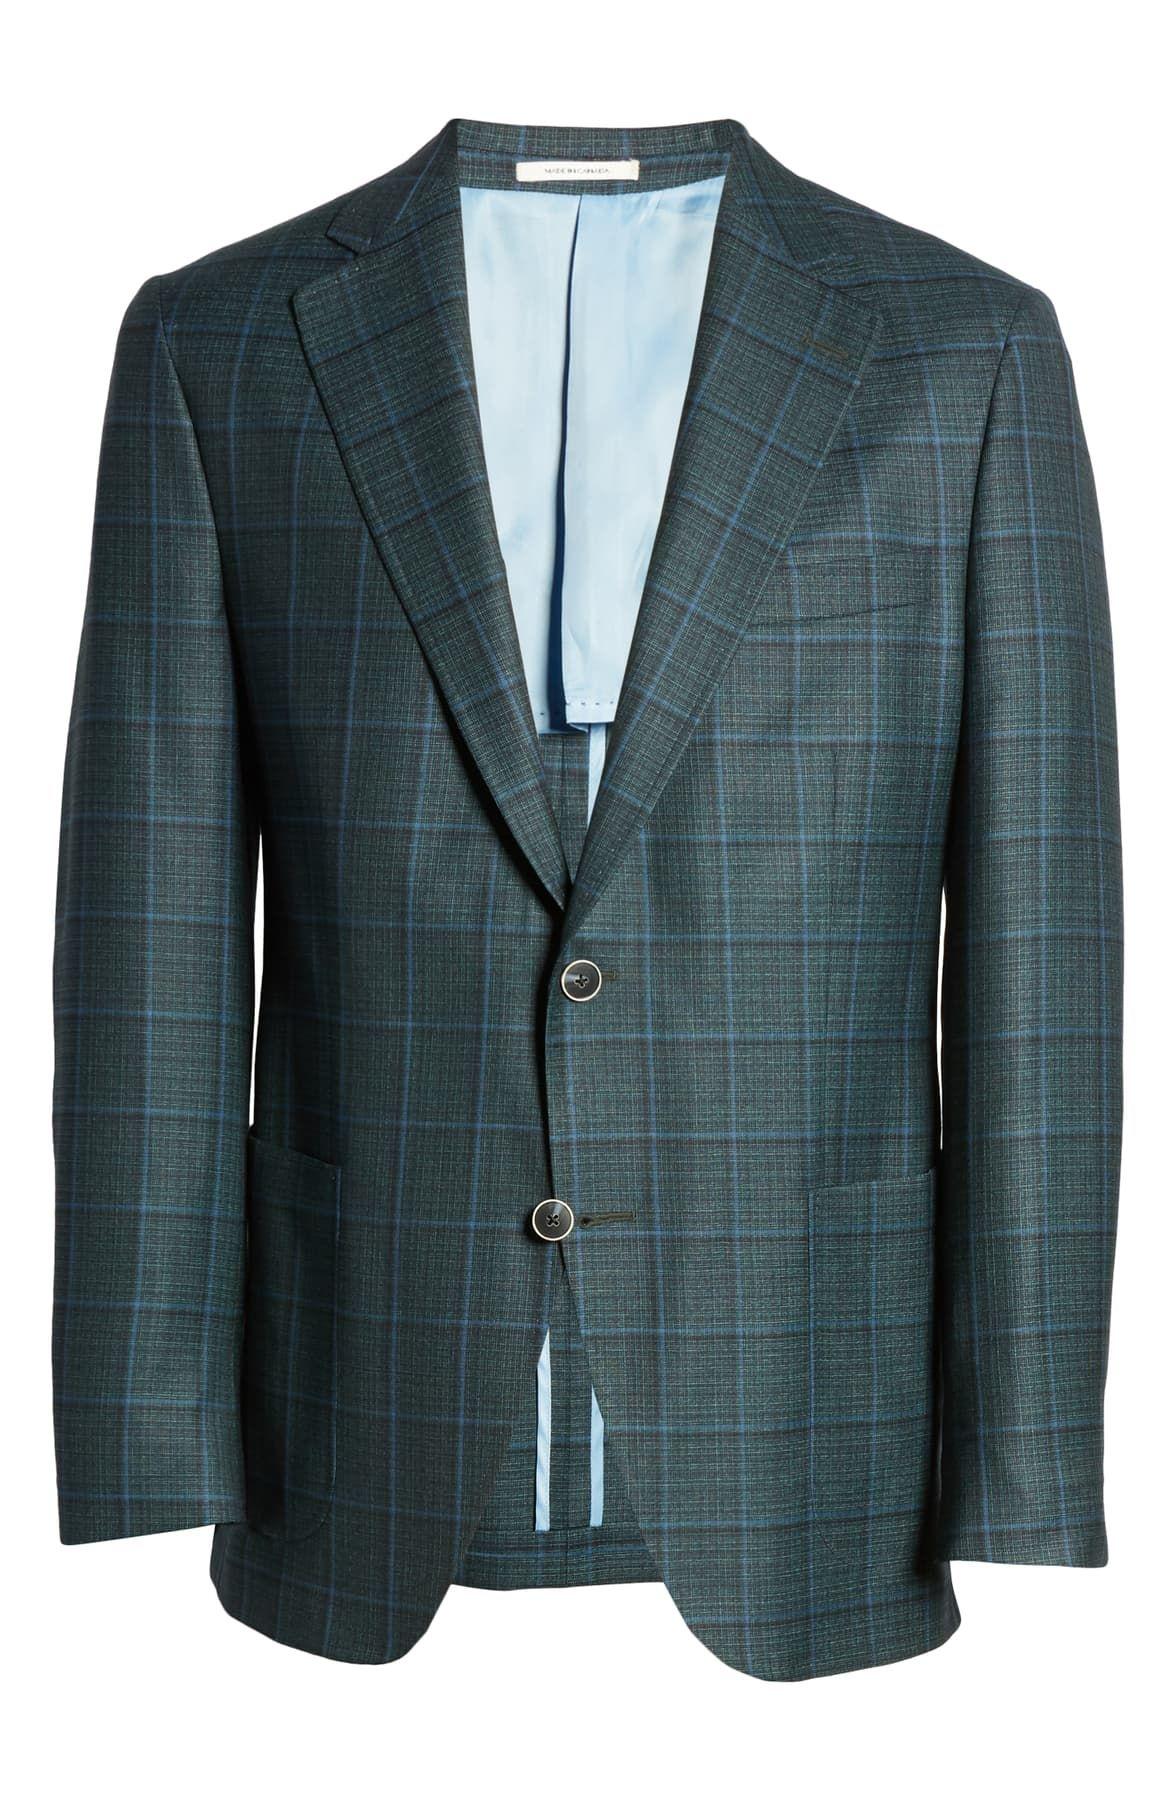 Peter Millar Classic Fit Windowpane Wool Sport Coat in Green for Men - Lyst